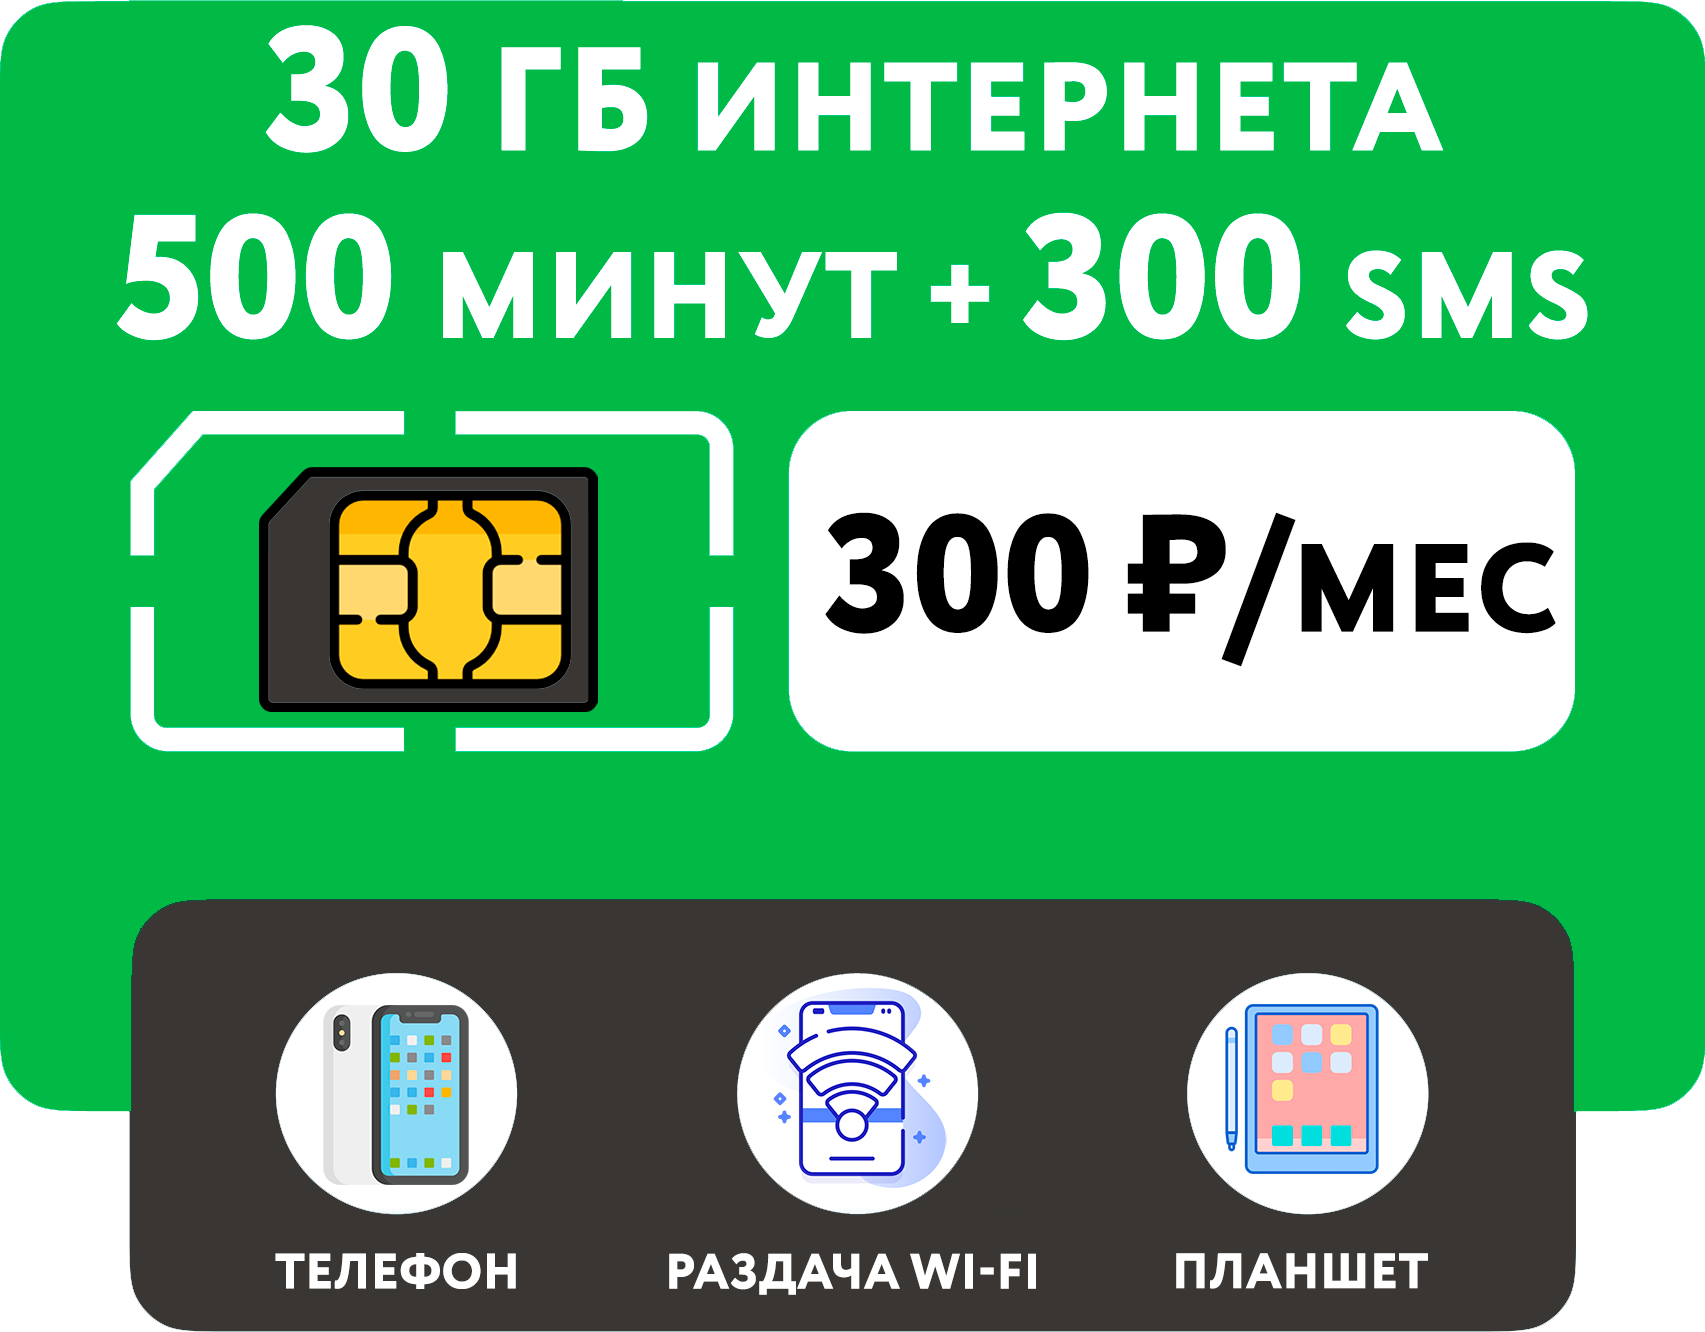 SIM-карта 30 гб интернета 3G/4G + 500 минут + 300 СМС за 300 руб/мес (смартфон, планшет) — купить в интернет-магазине по низкой цене на Яндекс Маркете